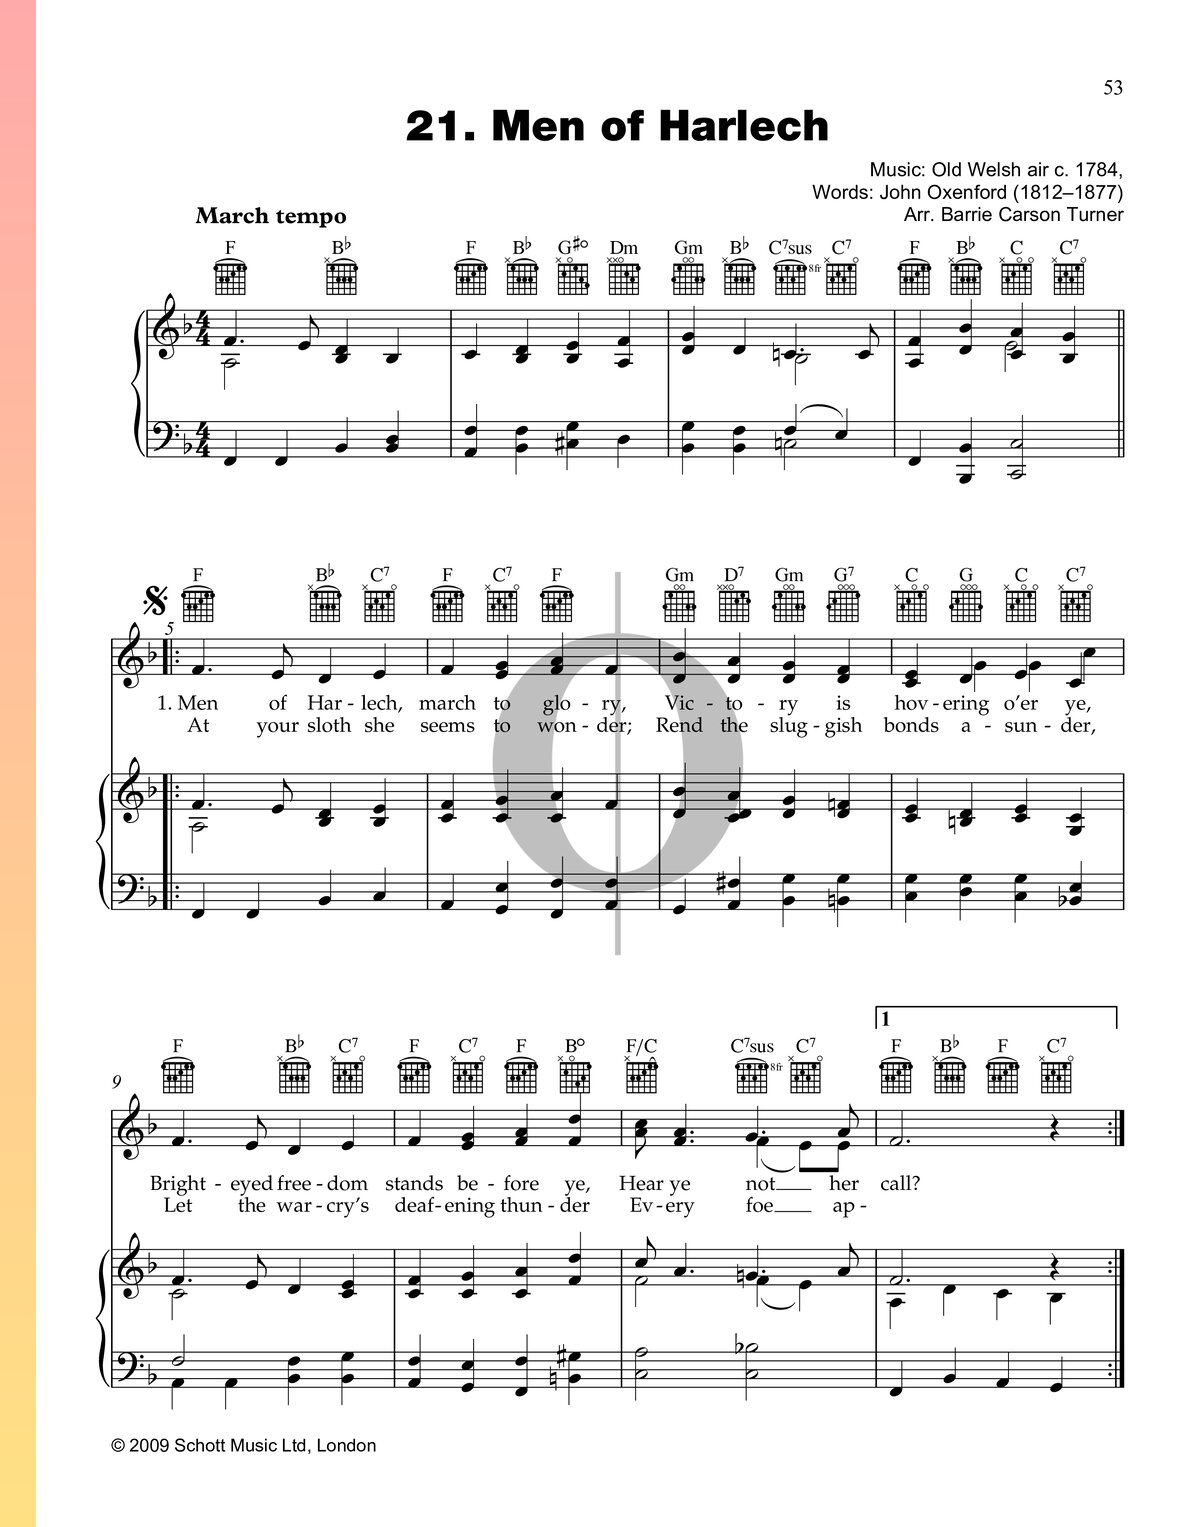 Men Of Harlech Sheet Music (Piano, Voice, Guitar) - OKTAV